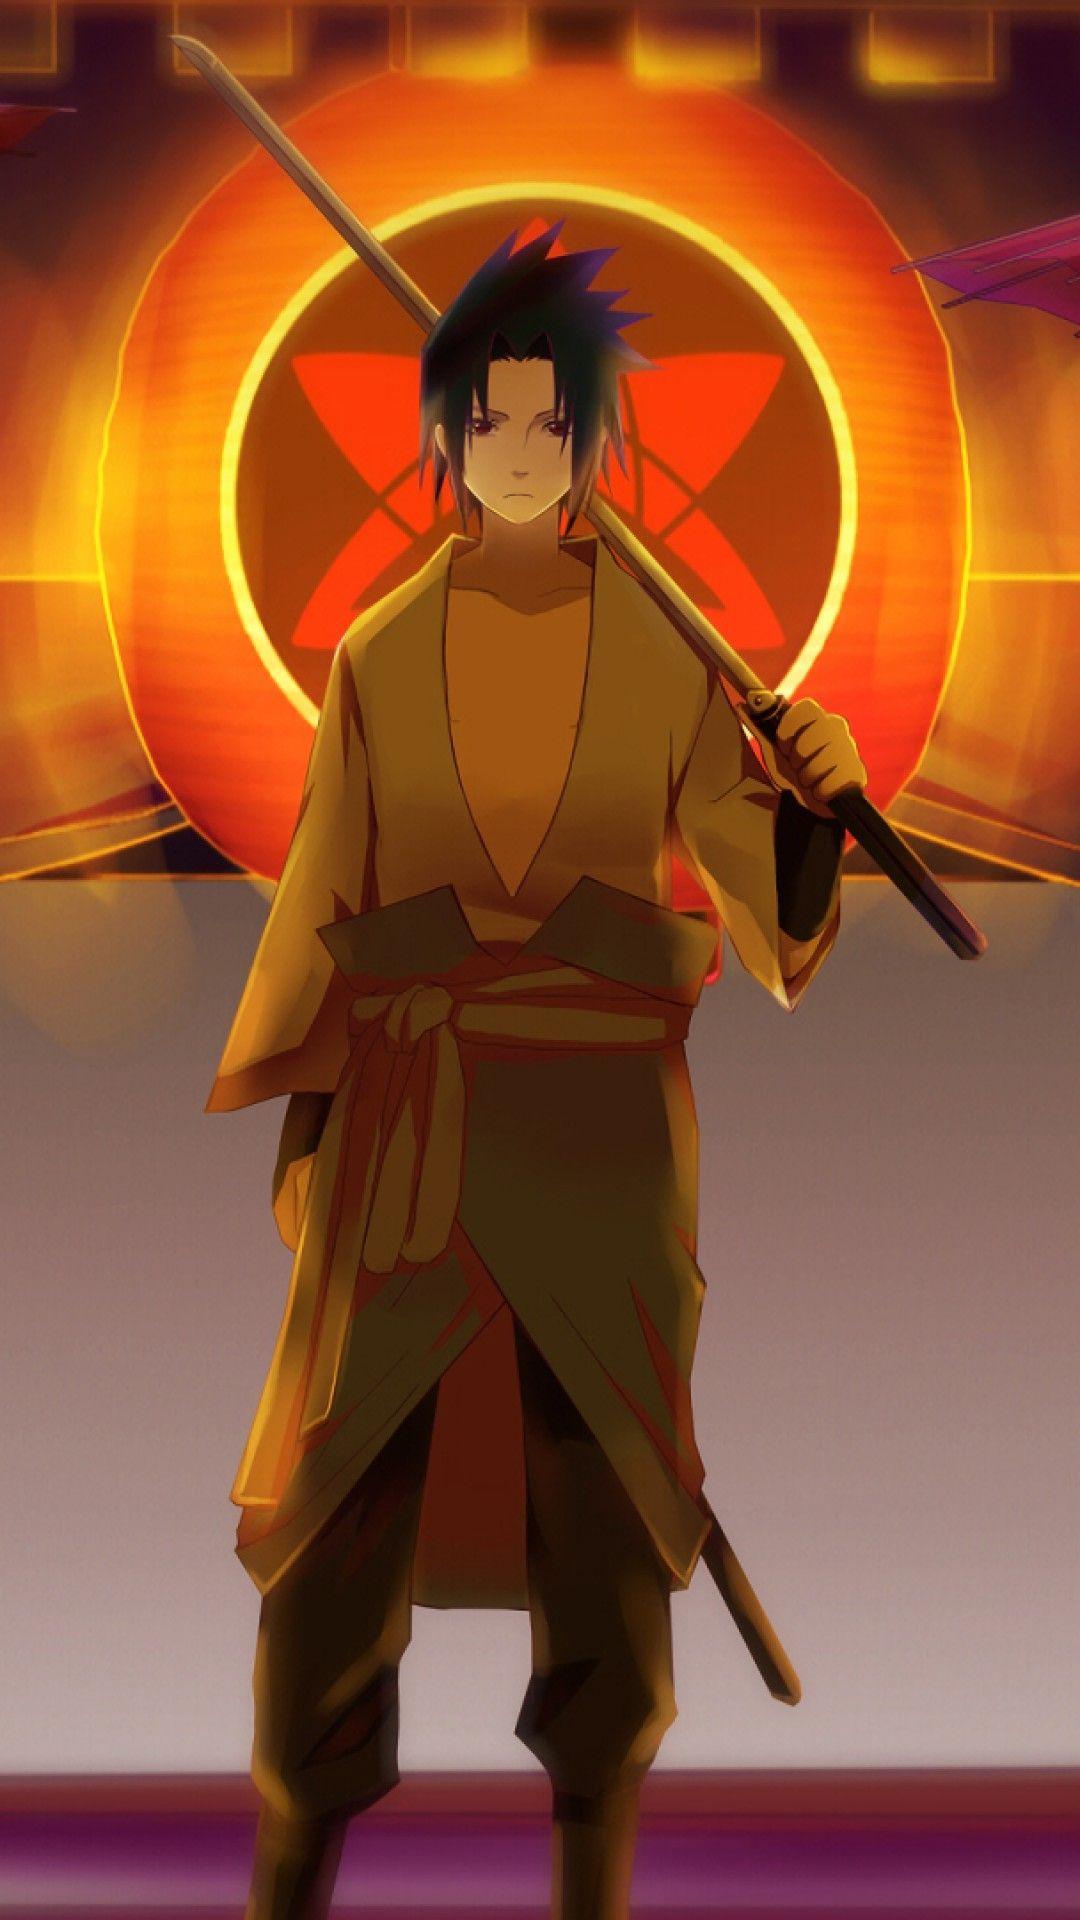 Sasuke iPhone Wallpaper: Image